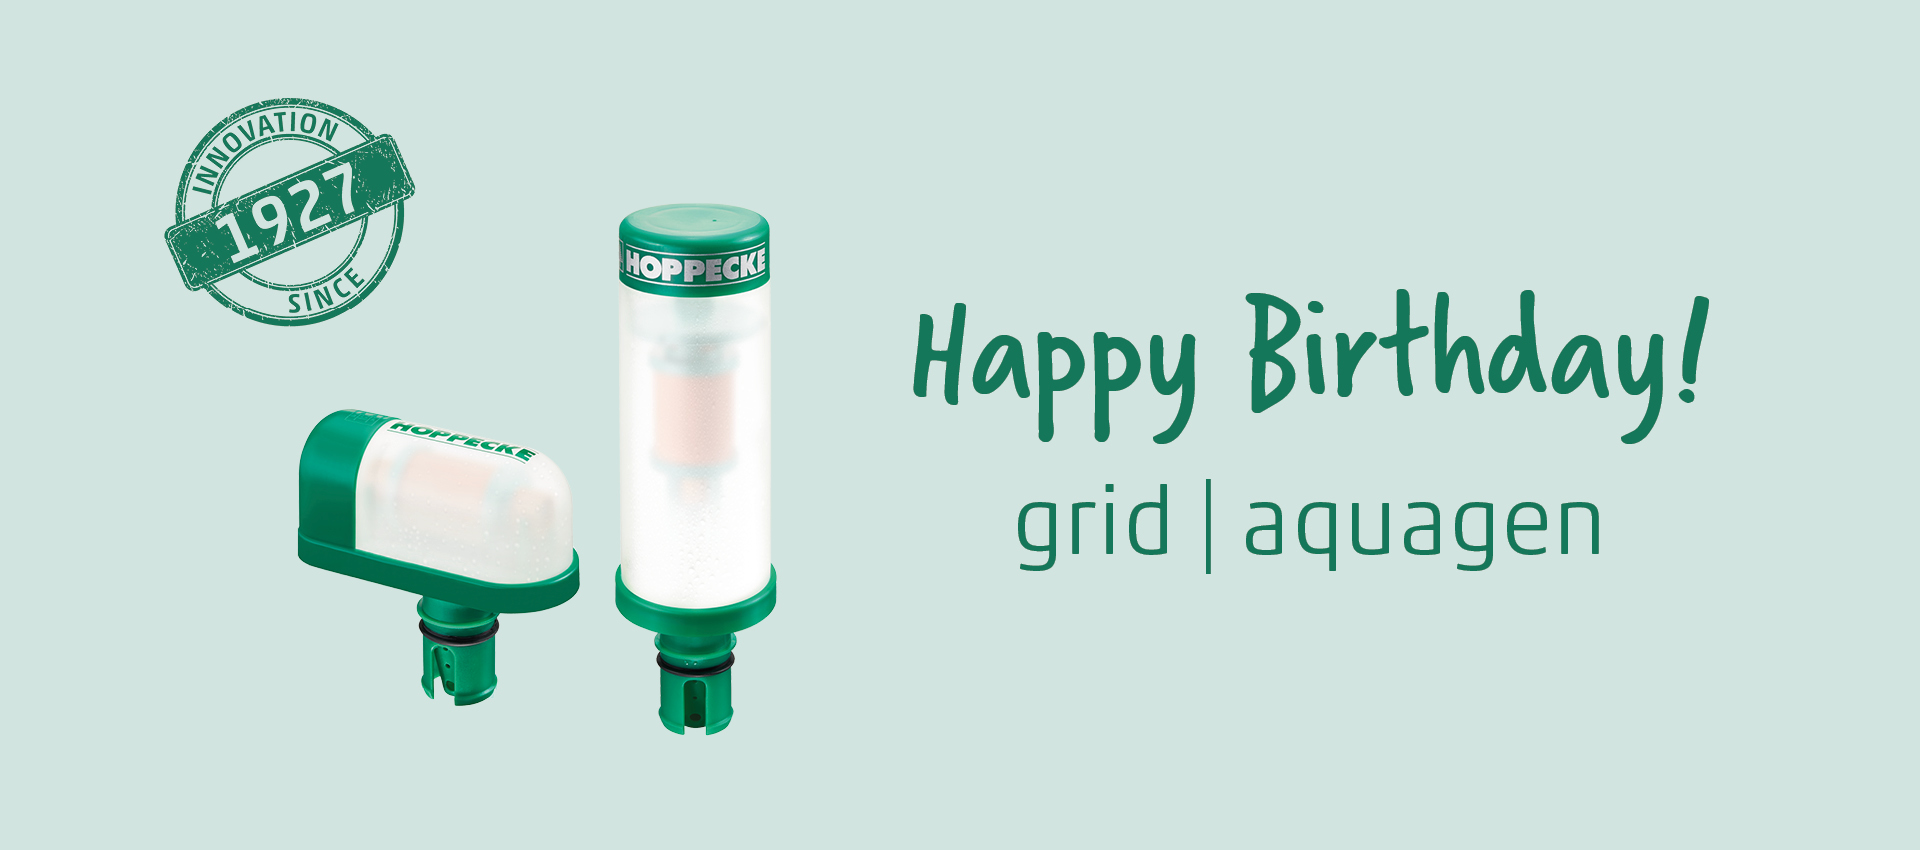 Happy Birthday grid | aquagen! - Thursday, 16.12.2021